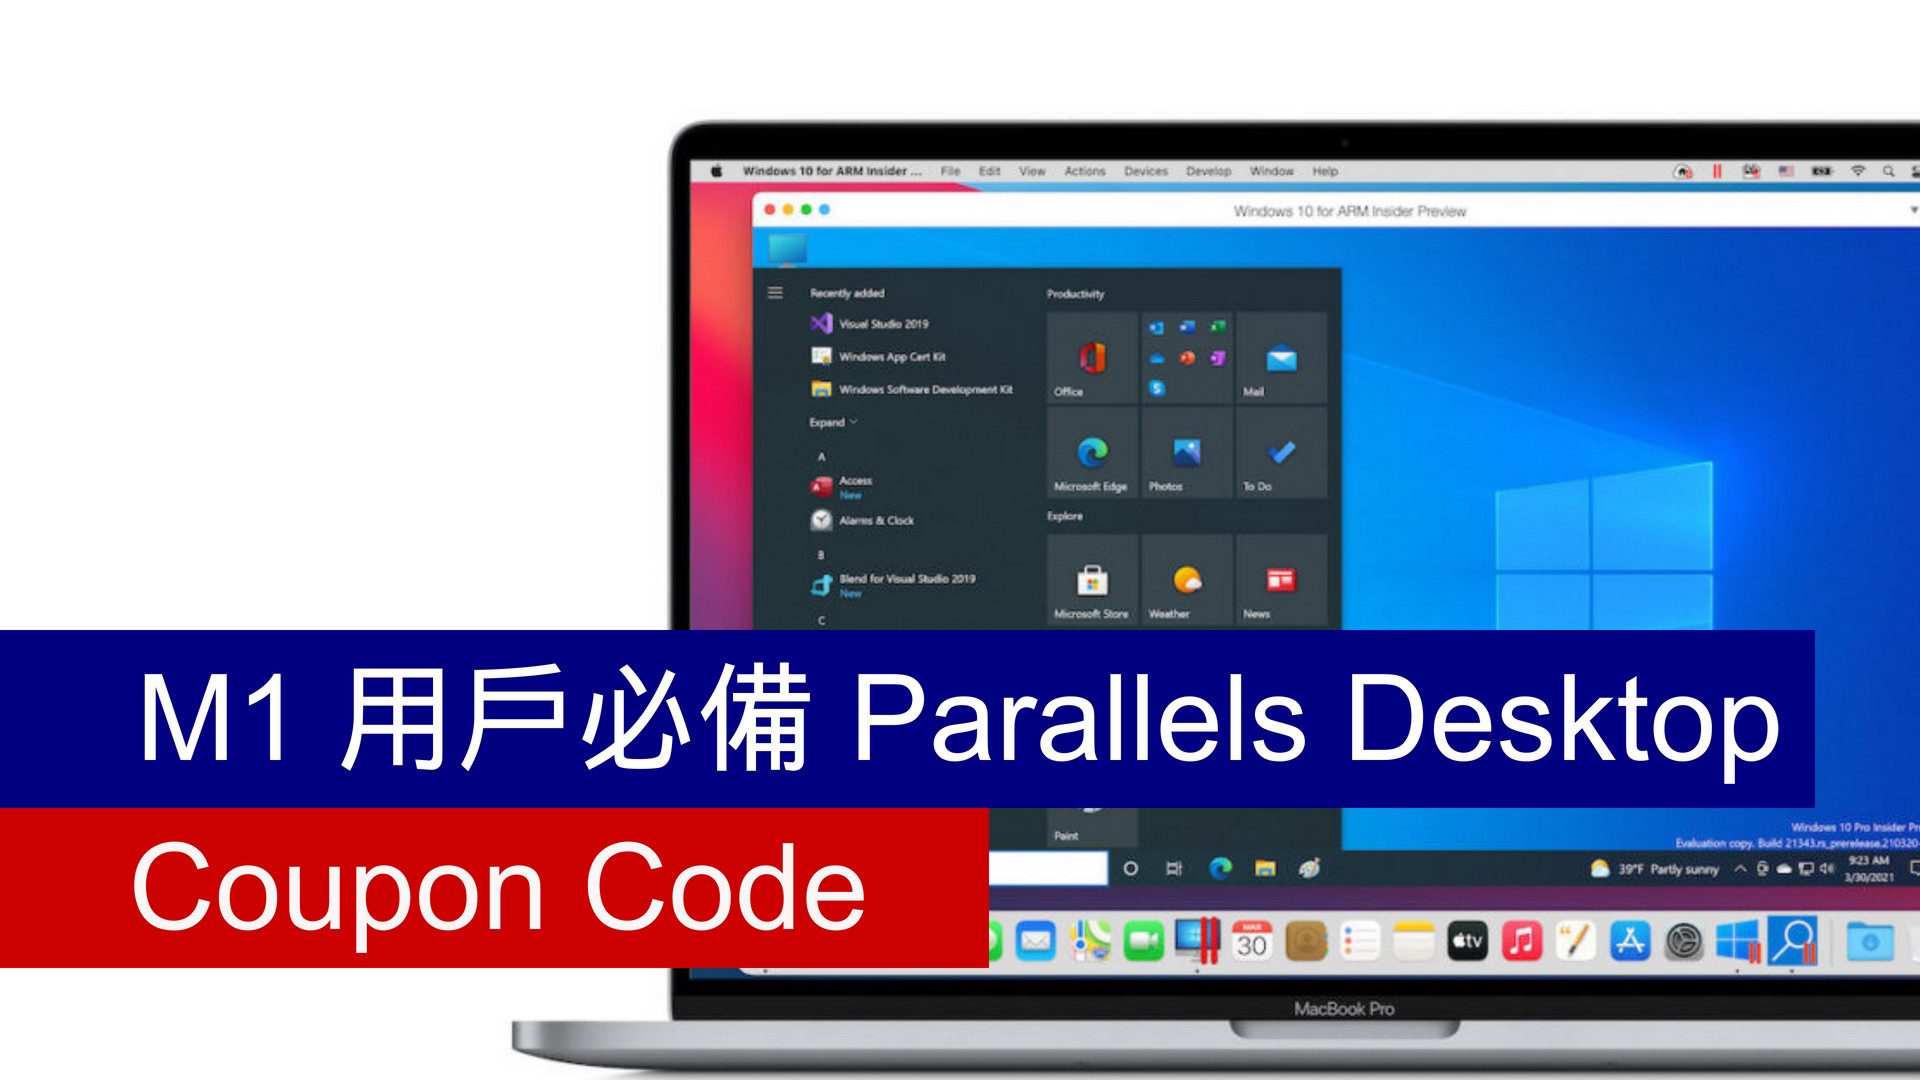 parallels desktop coupon code